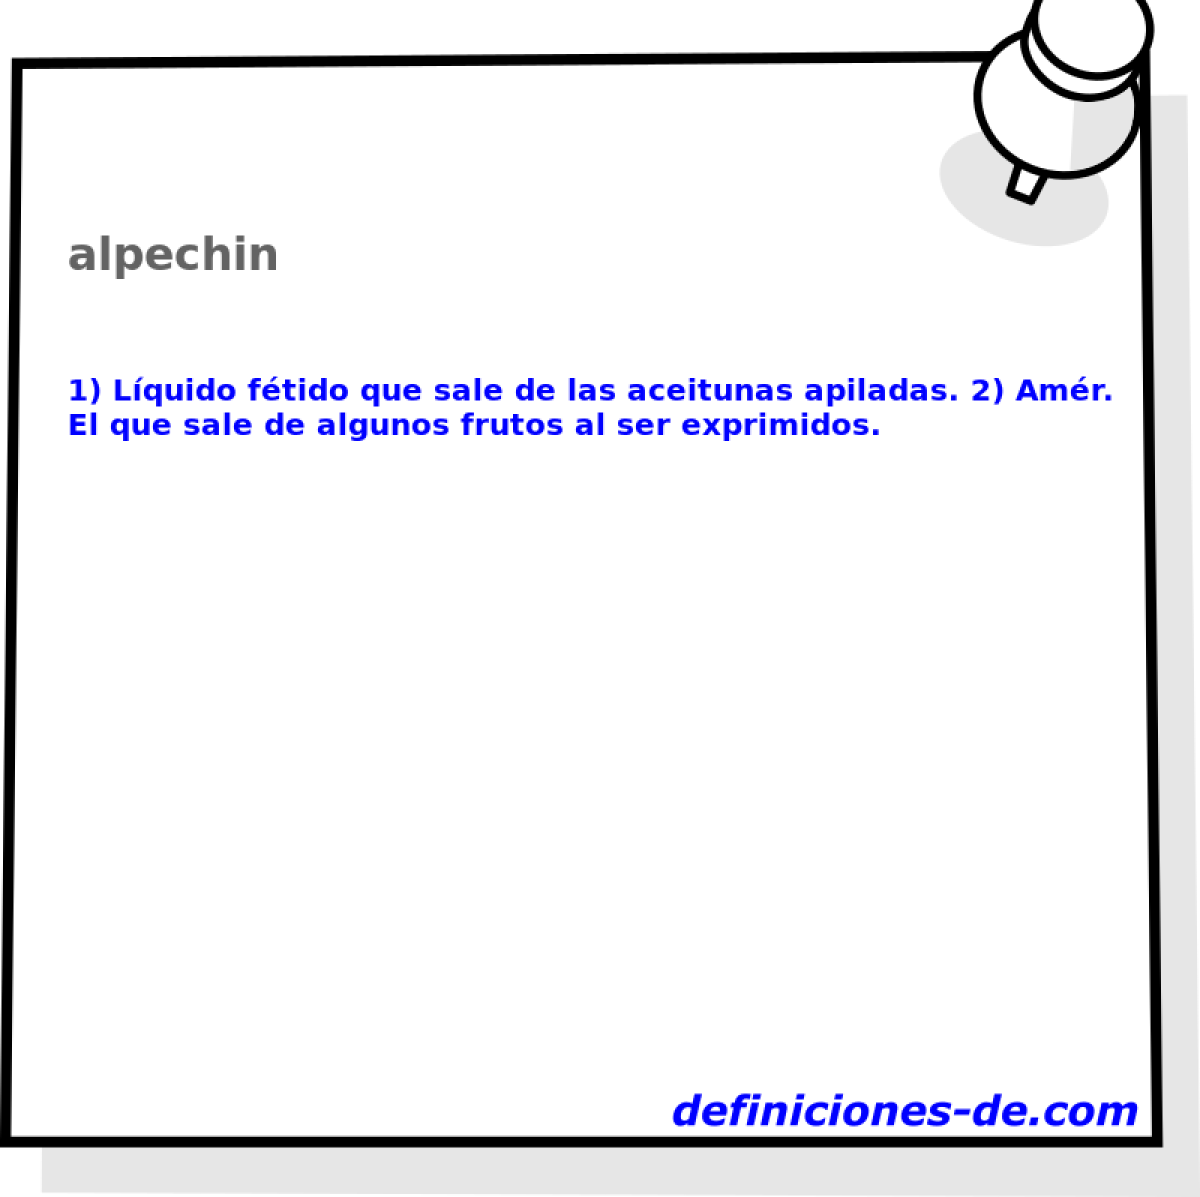 alpechin 